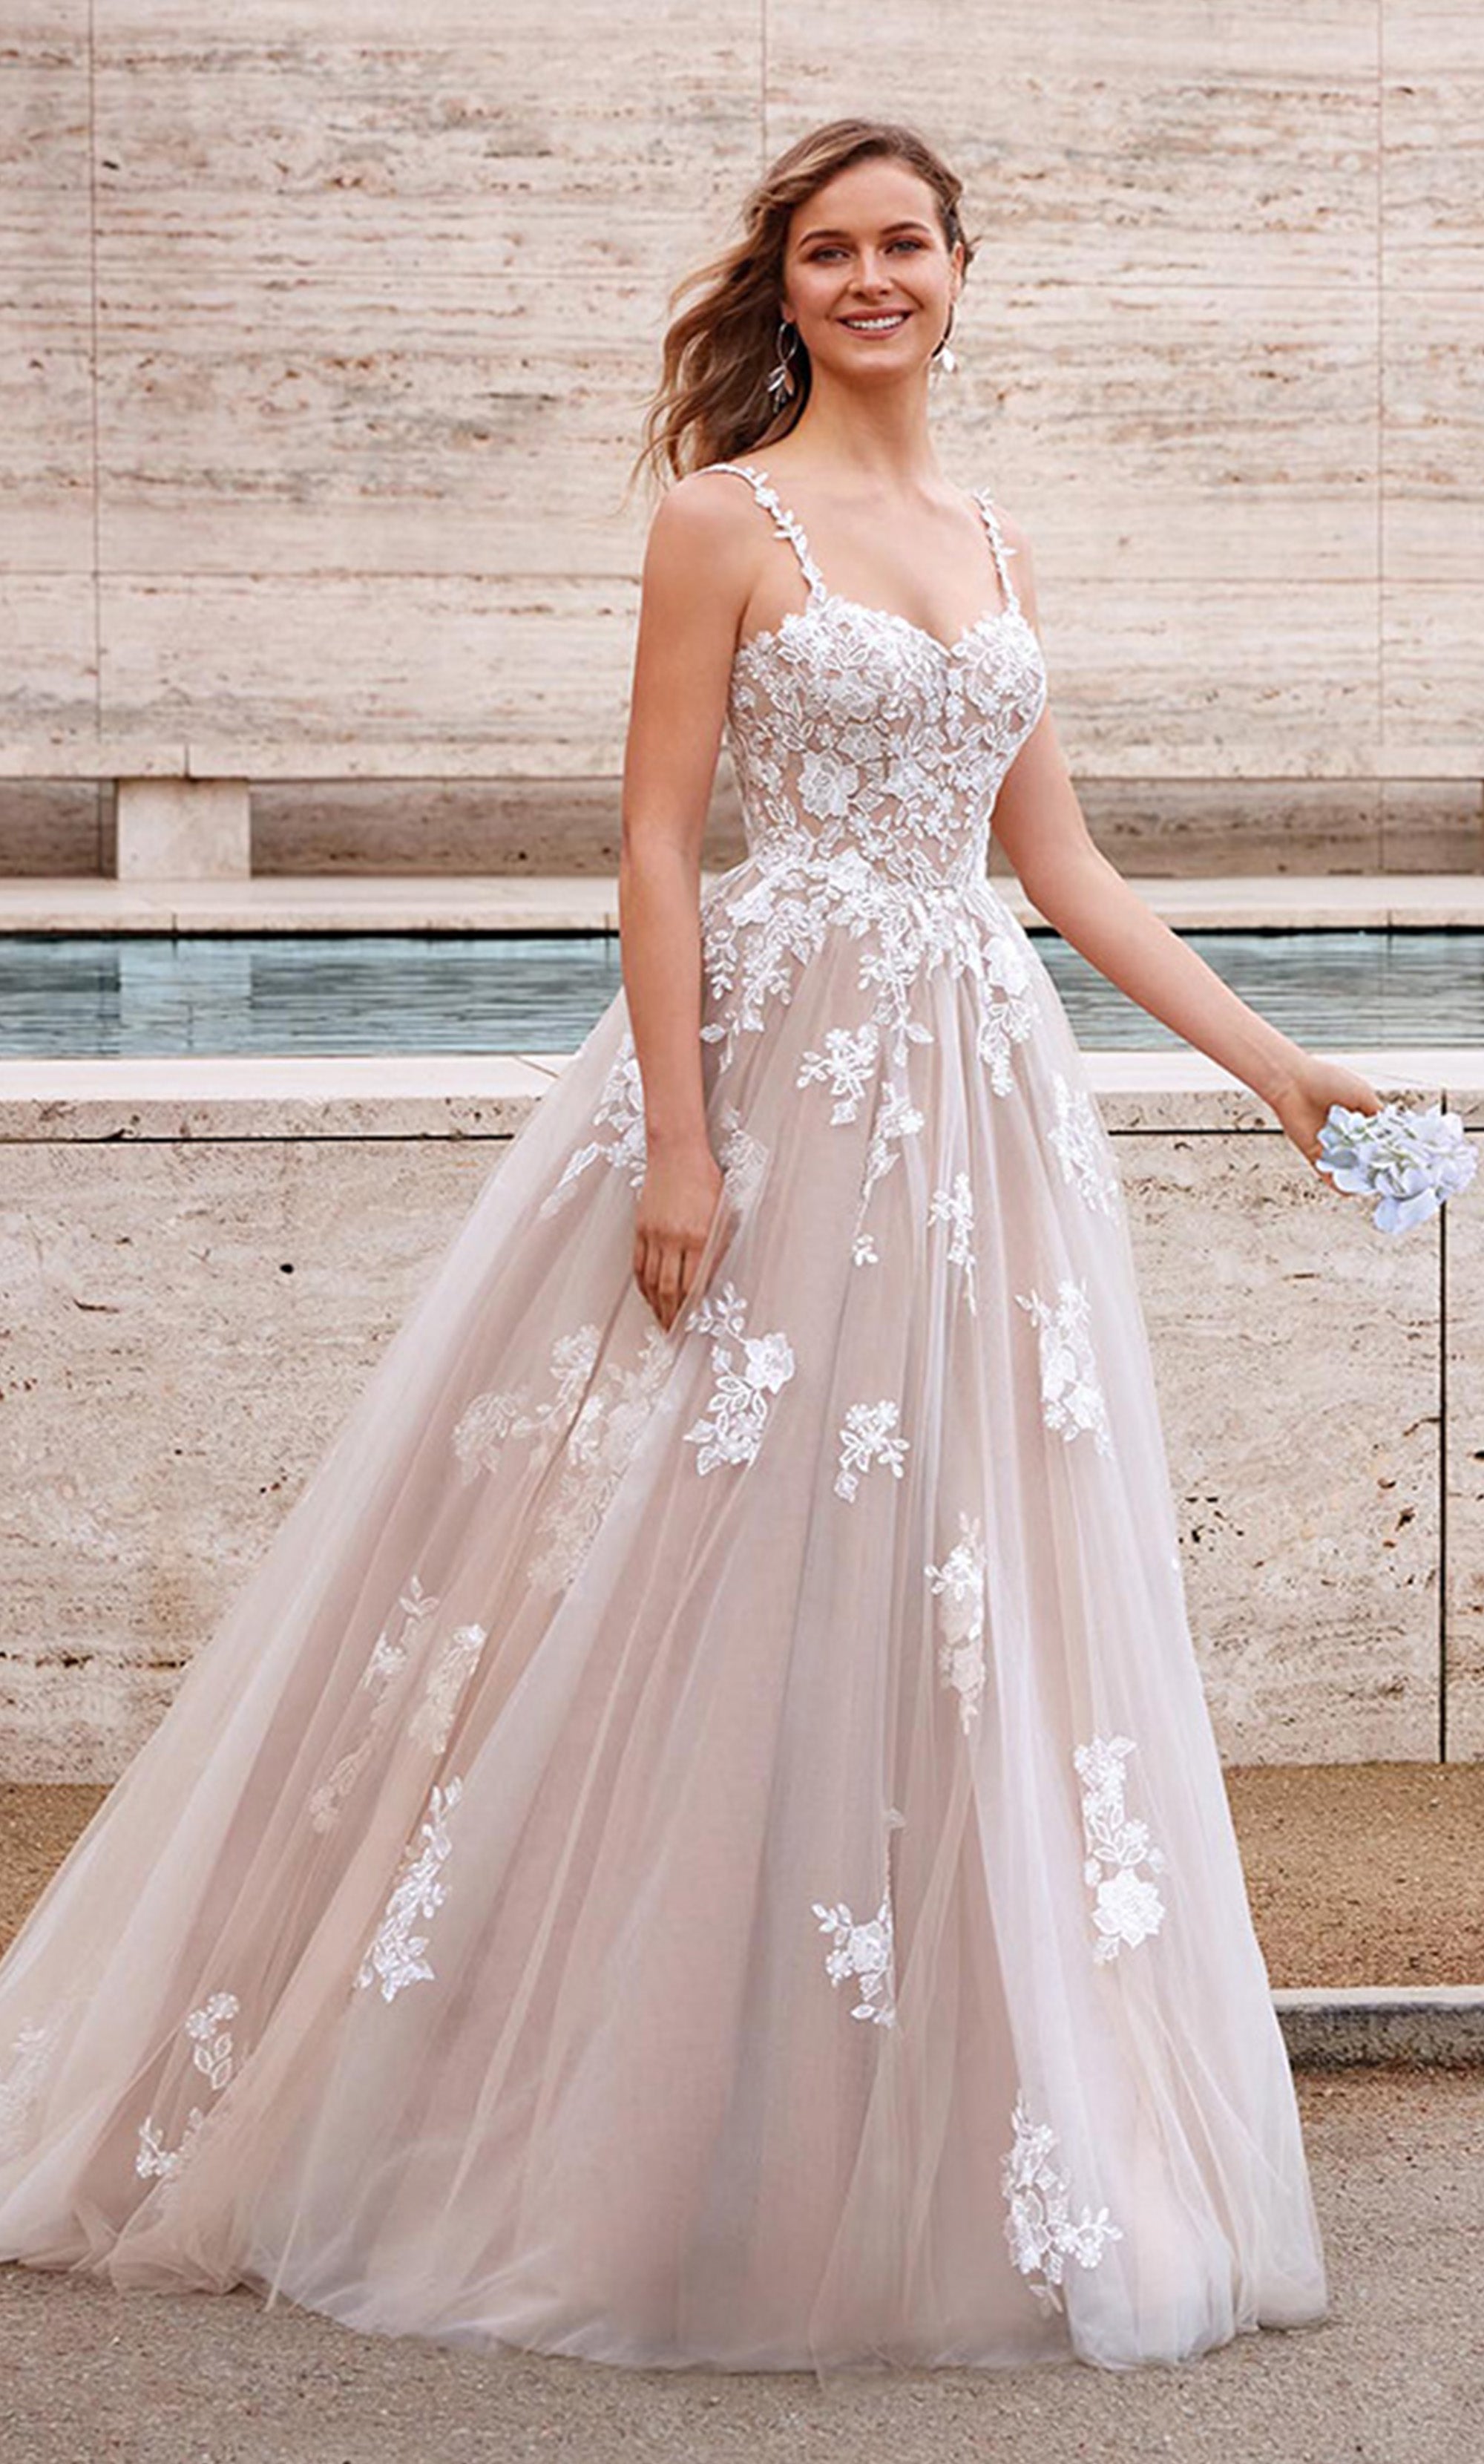 Plus Size Wedding Dress, Plus Size Bridal Gown, Wedding Dress With Sleeves  Plus Size Lace, Plus Size Blush Pink Simple 0014 - Etsy